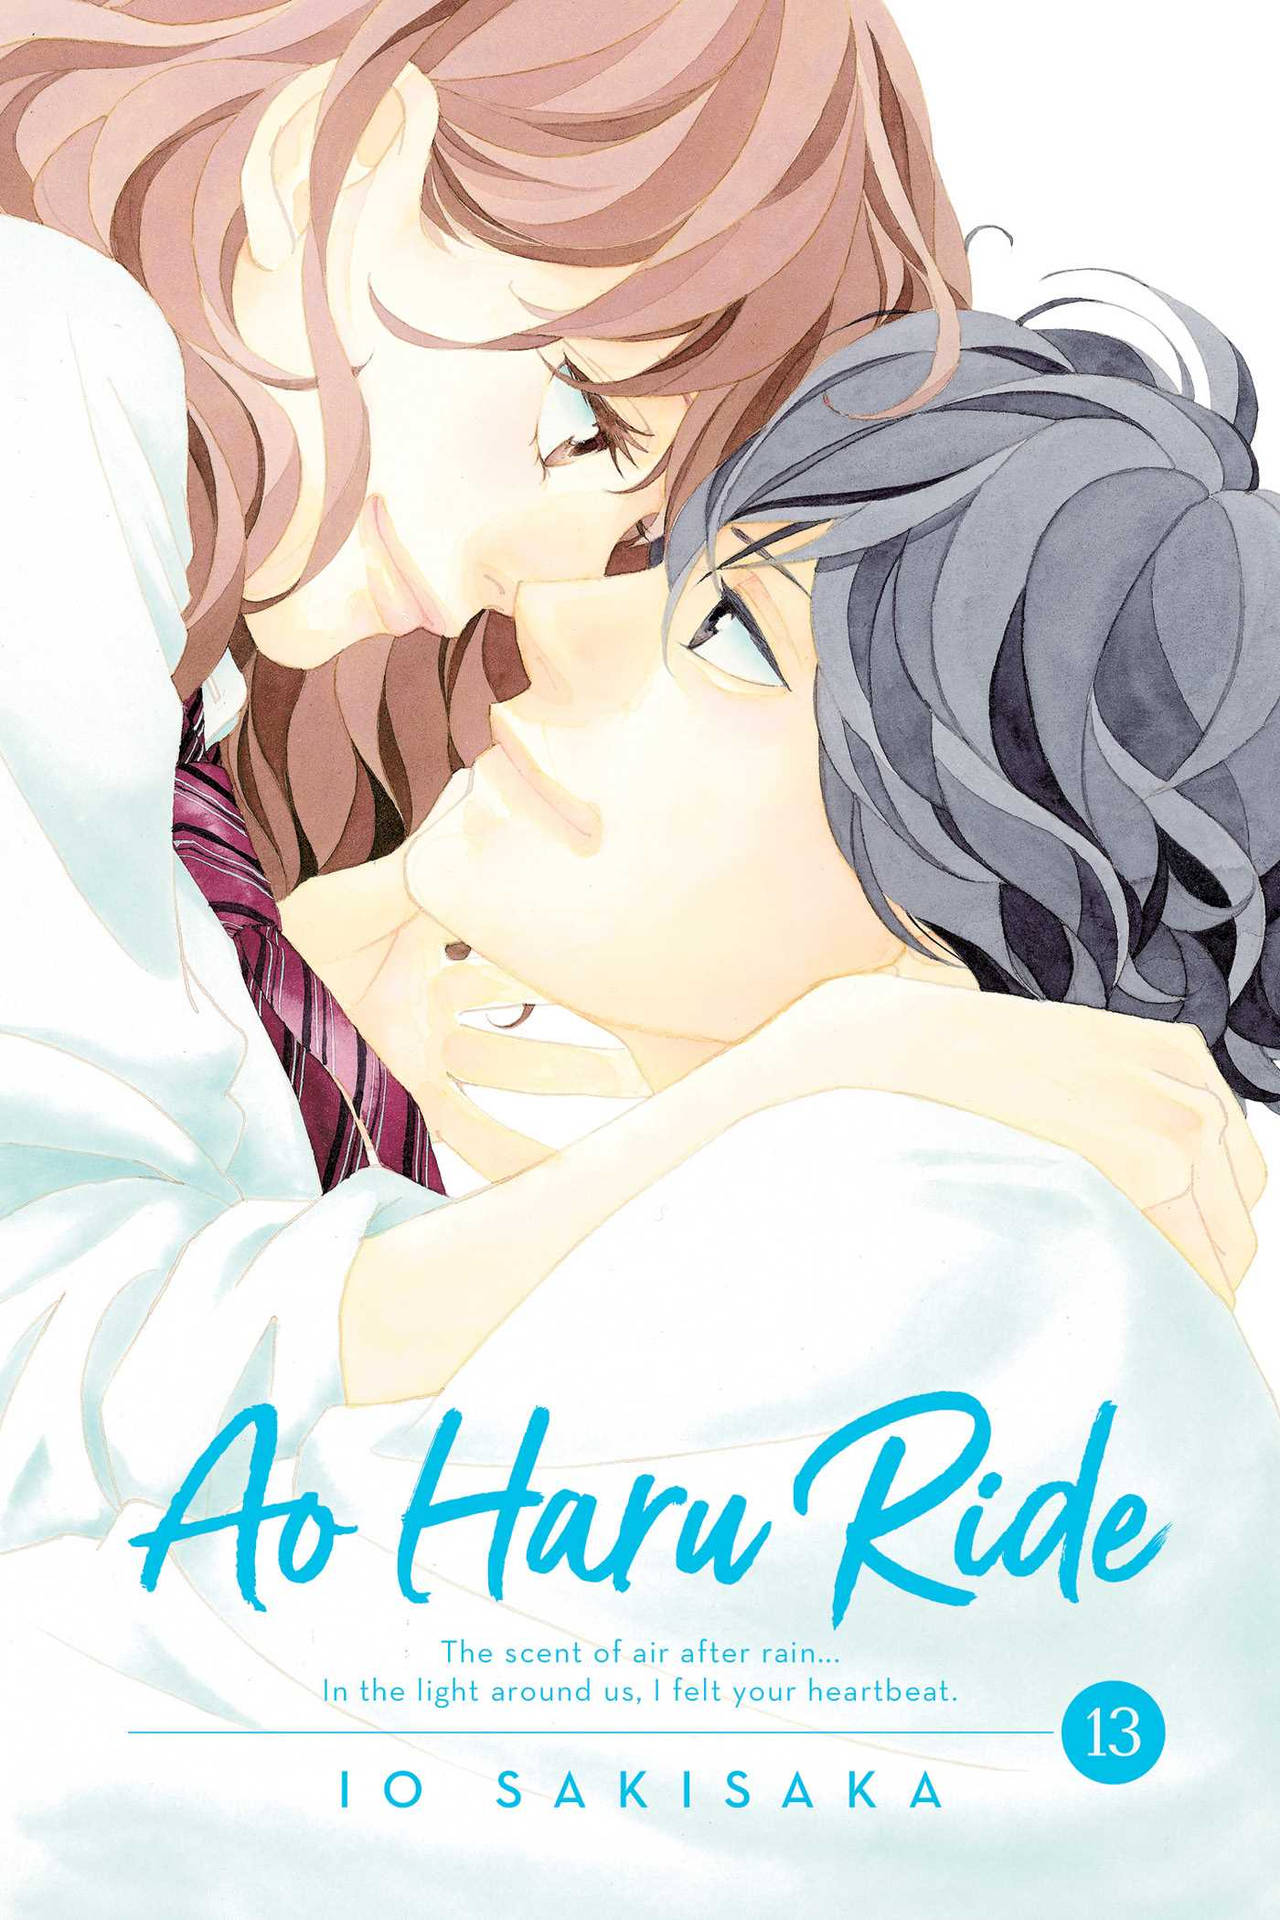 Ao Haru Ride Your Heartbeat Background